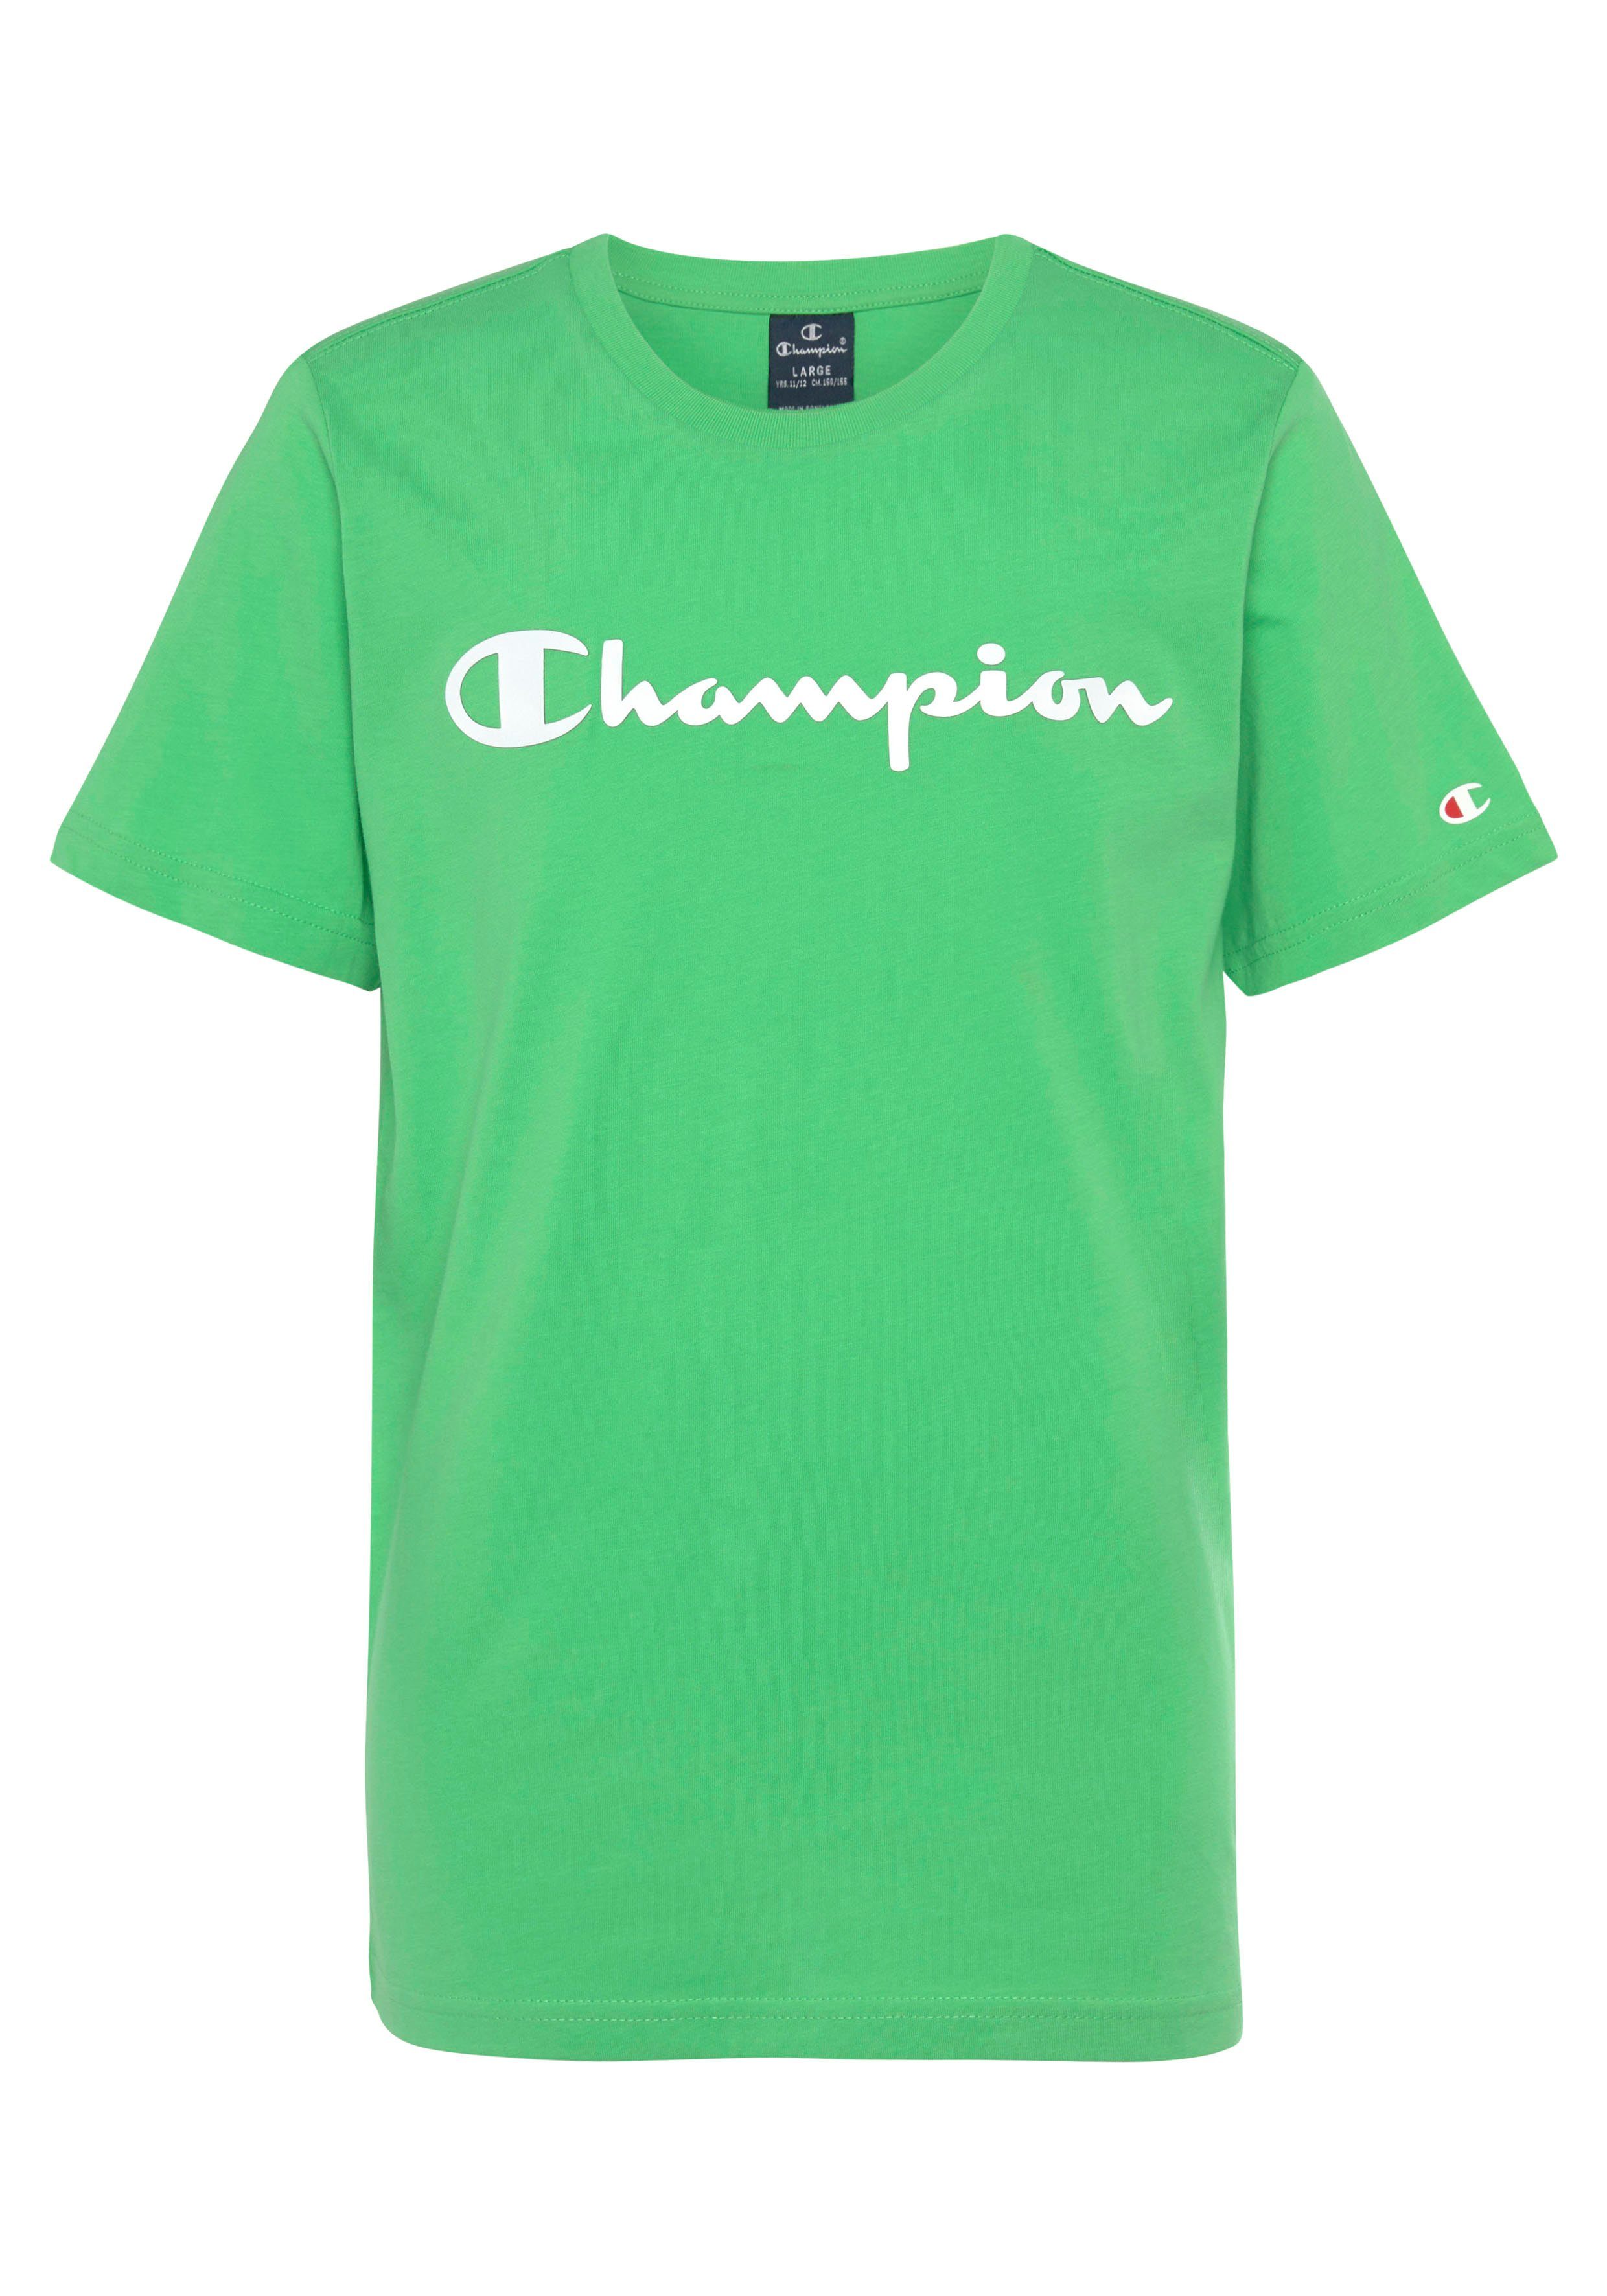 grün T-Shirt Champion Crewneck T-Shirt